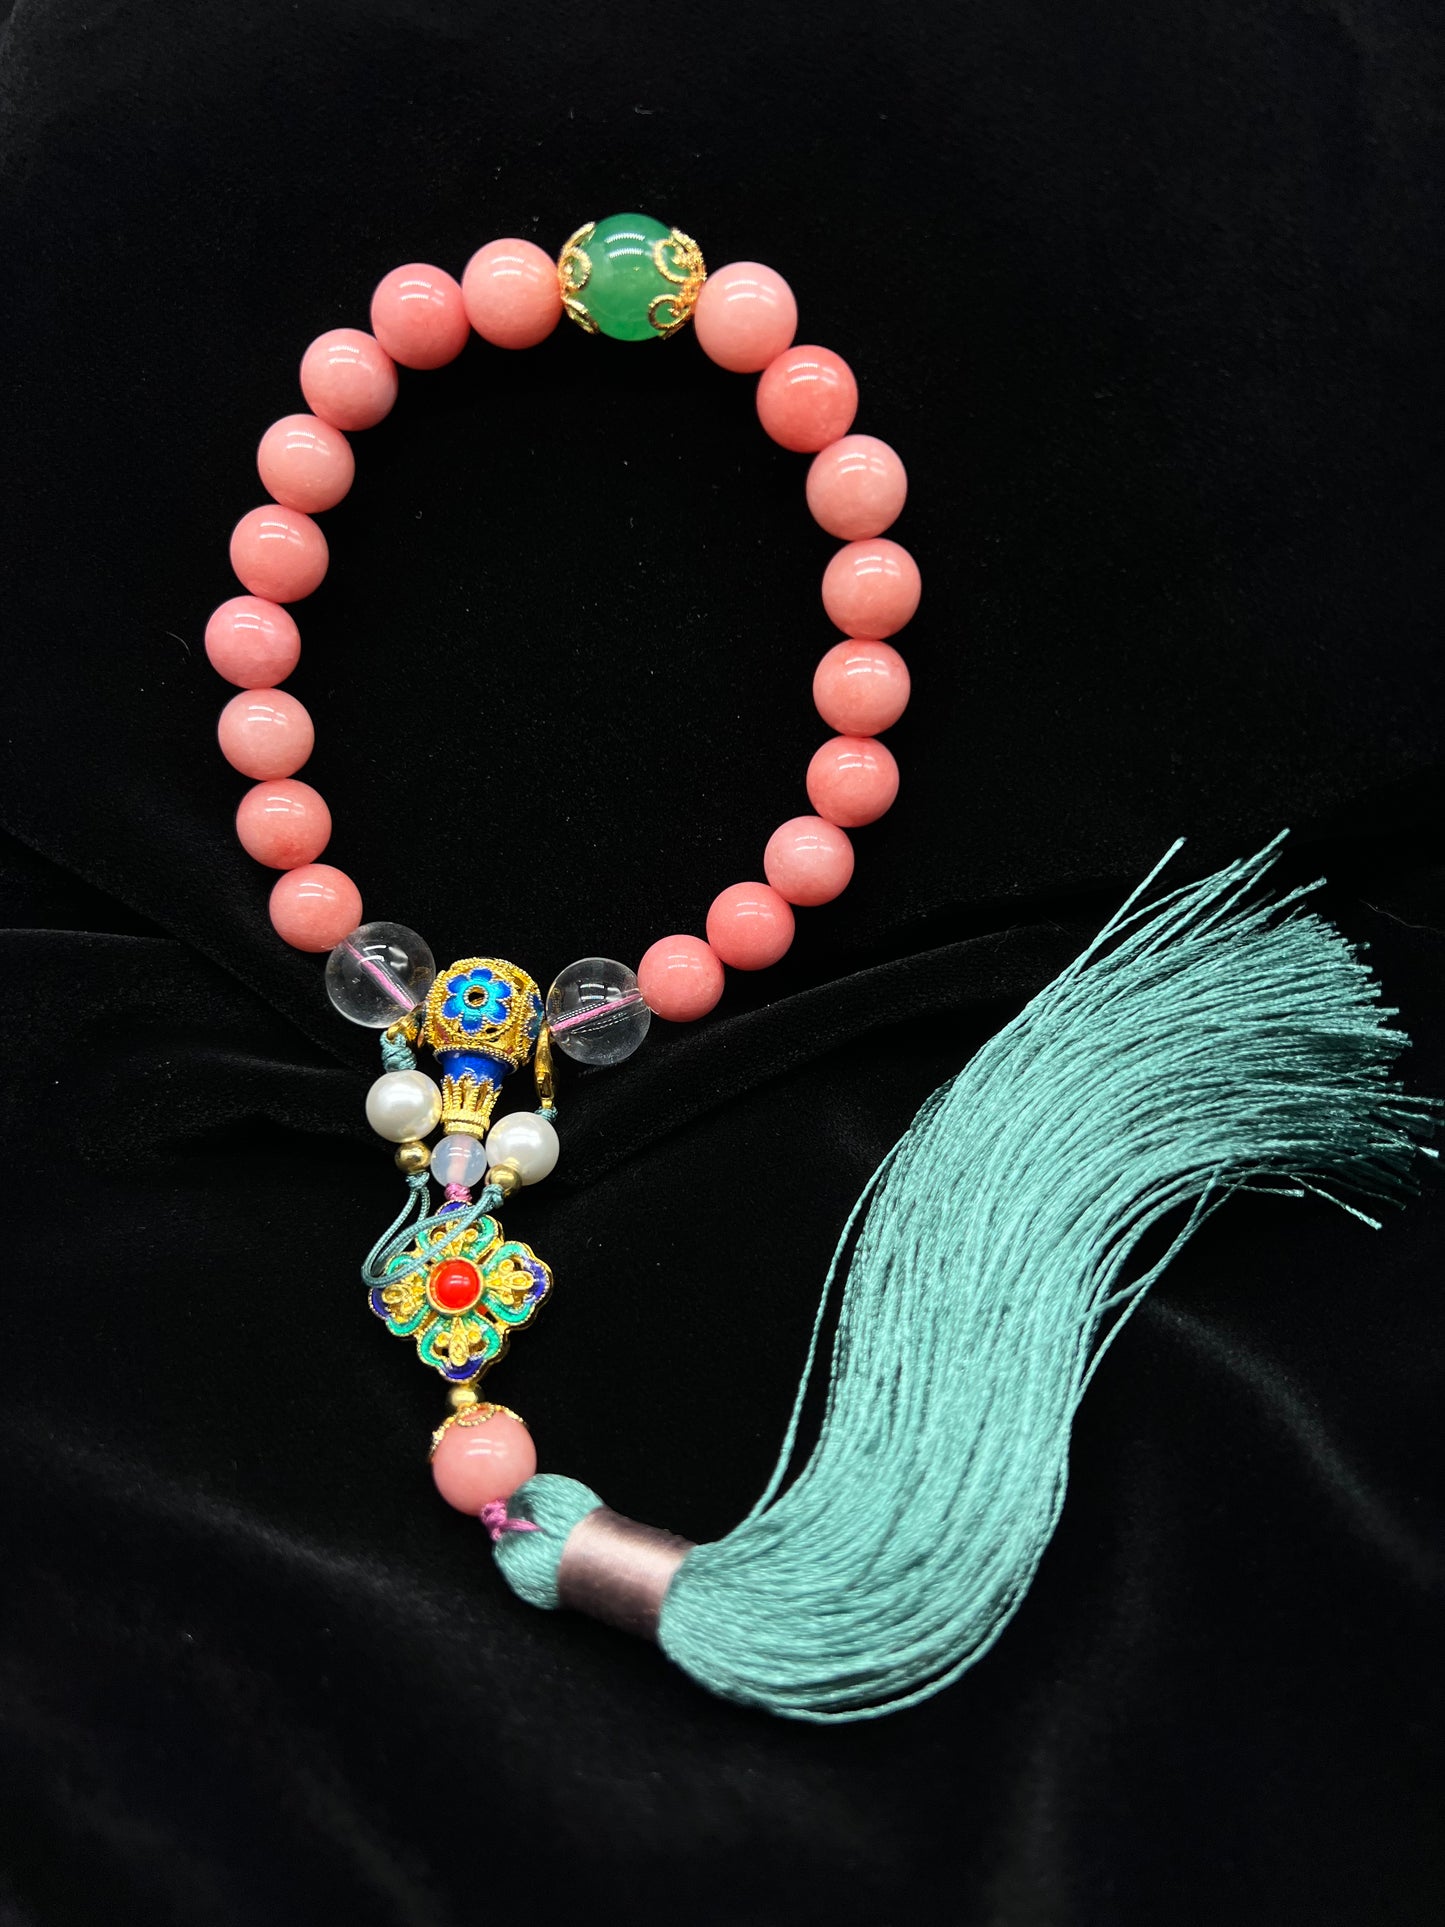 18-Beads Bracelet